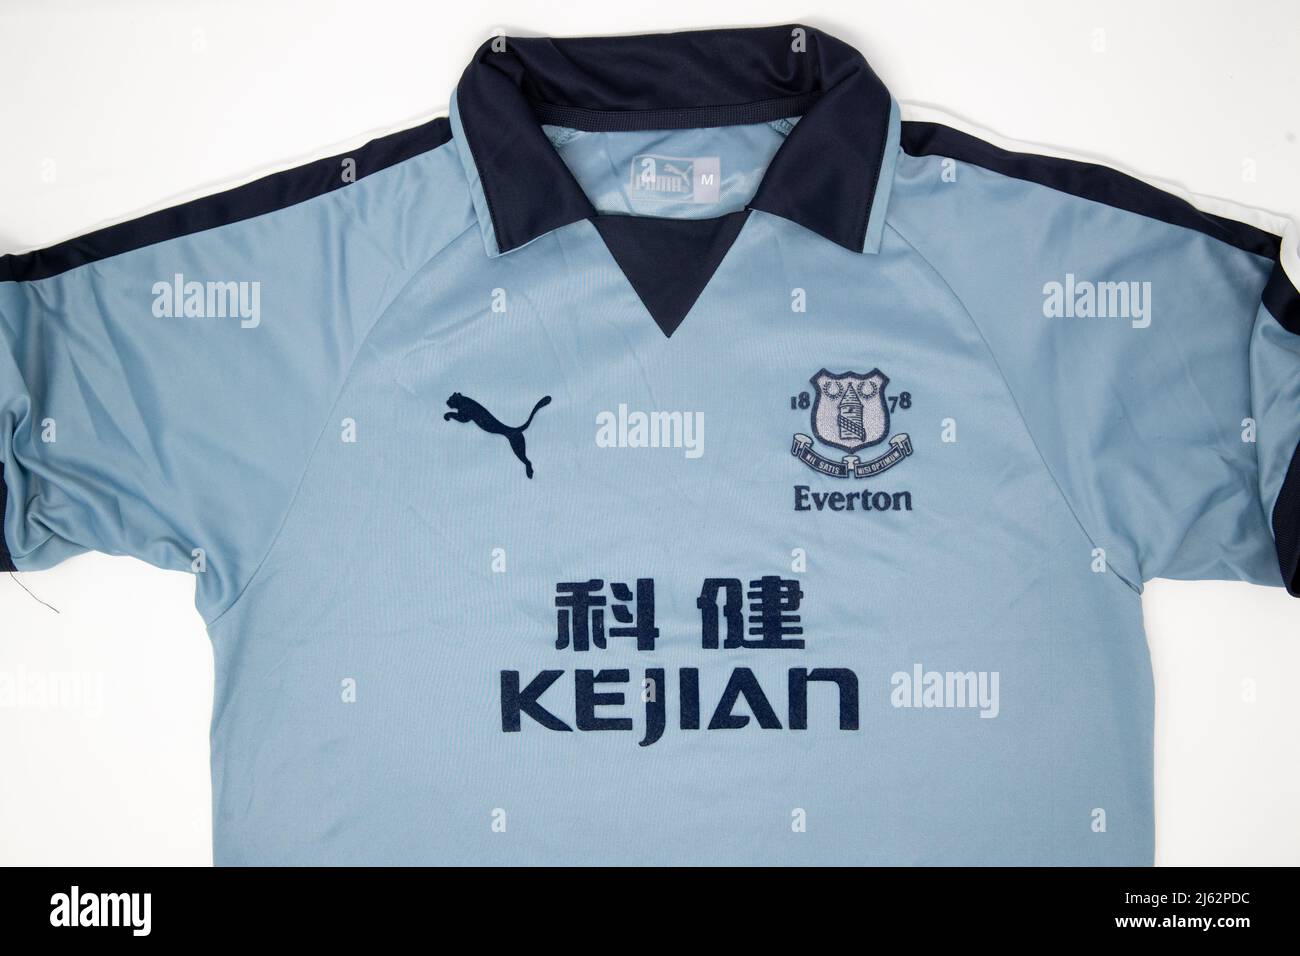 Everton puma football shirt with Kejian sponsor Stock Photo